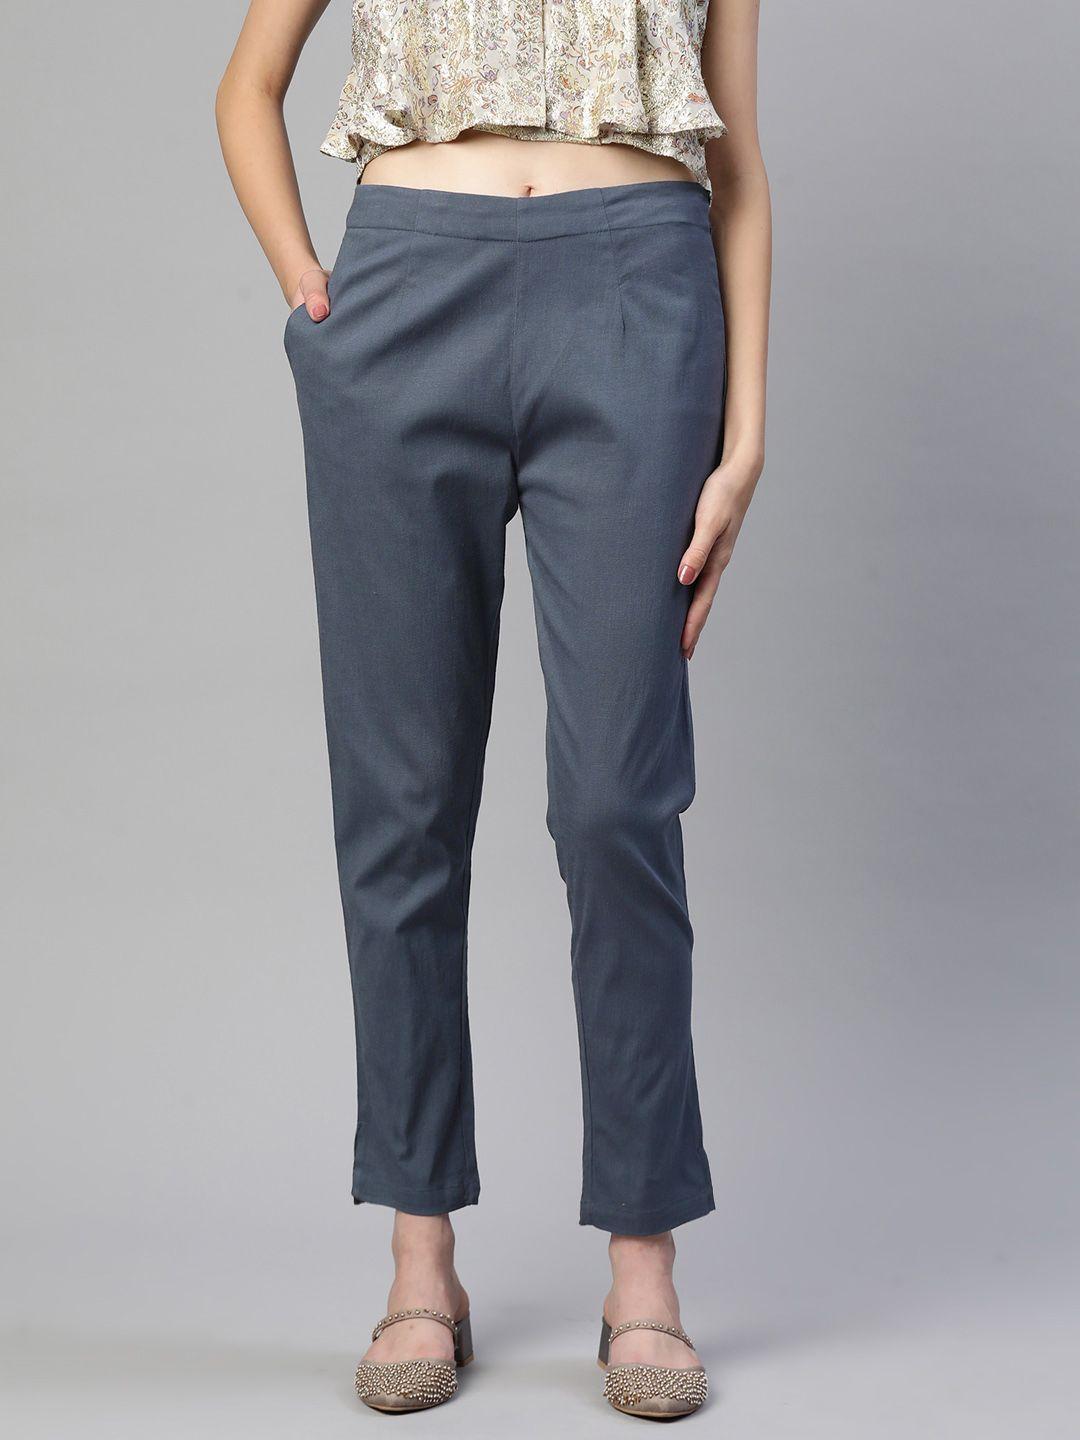 readiprint fashions women grey solid regular trousers